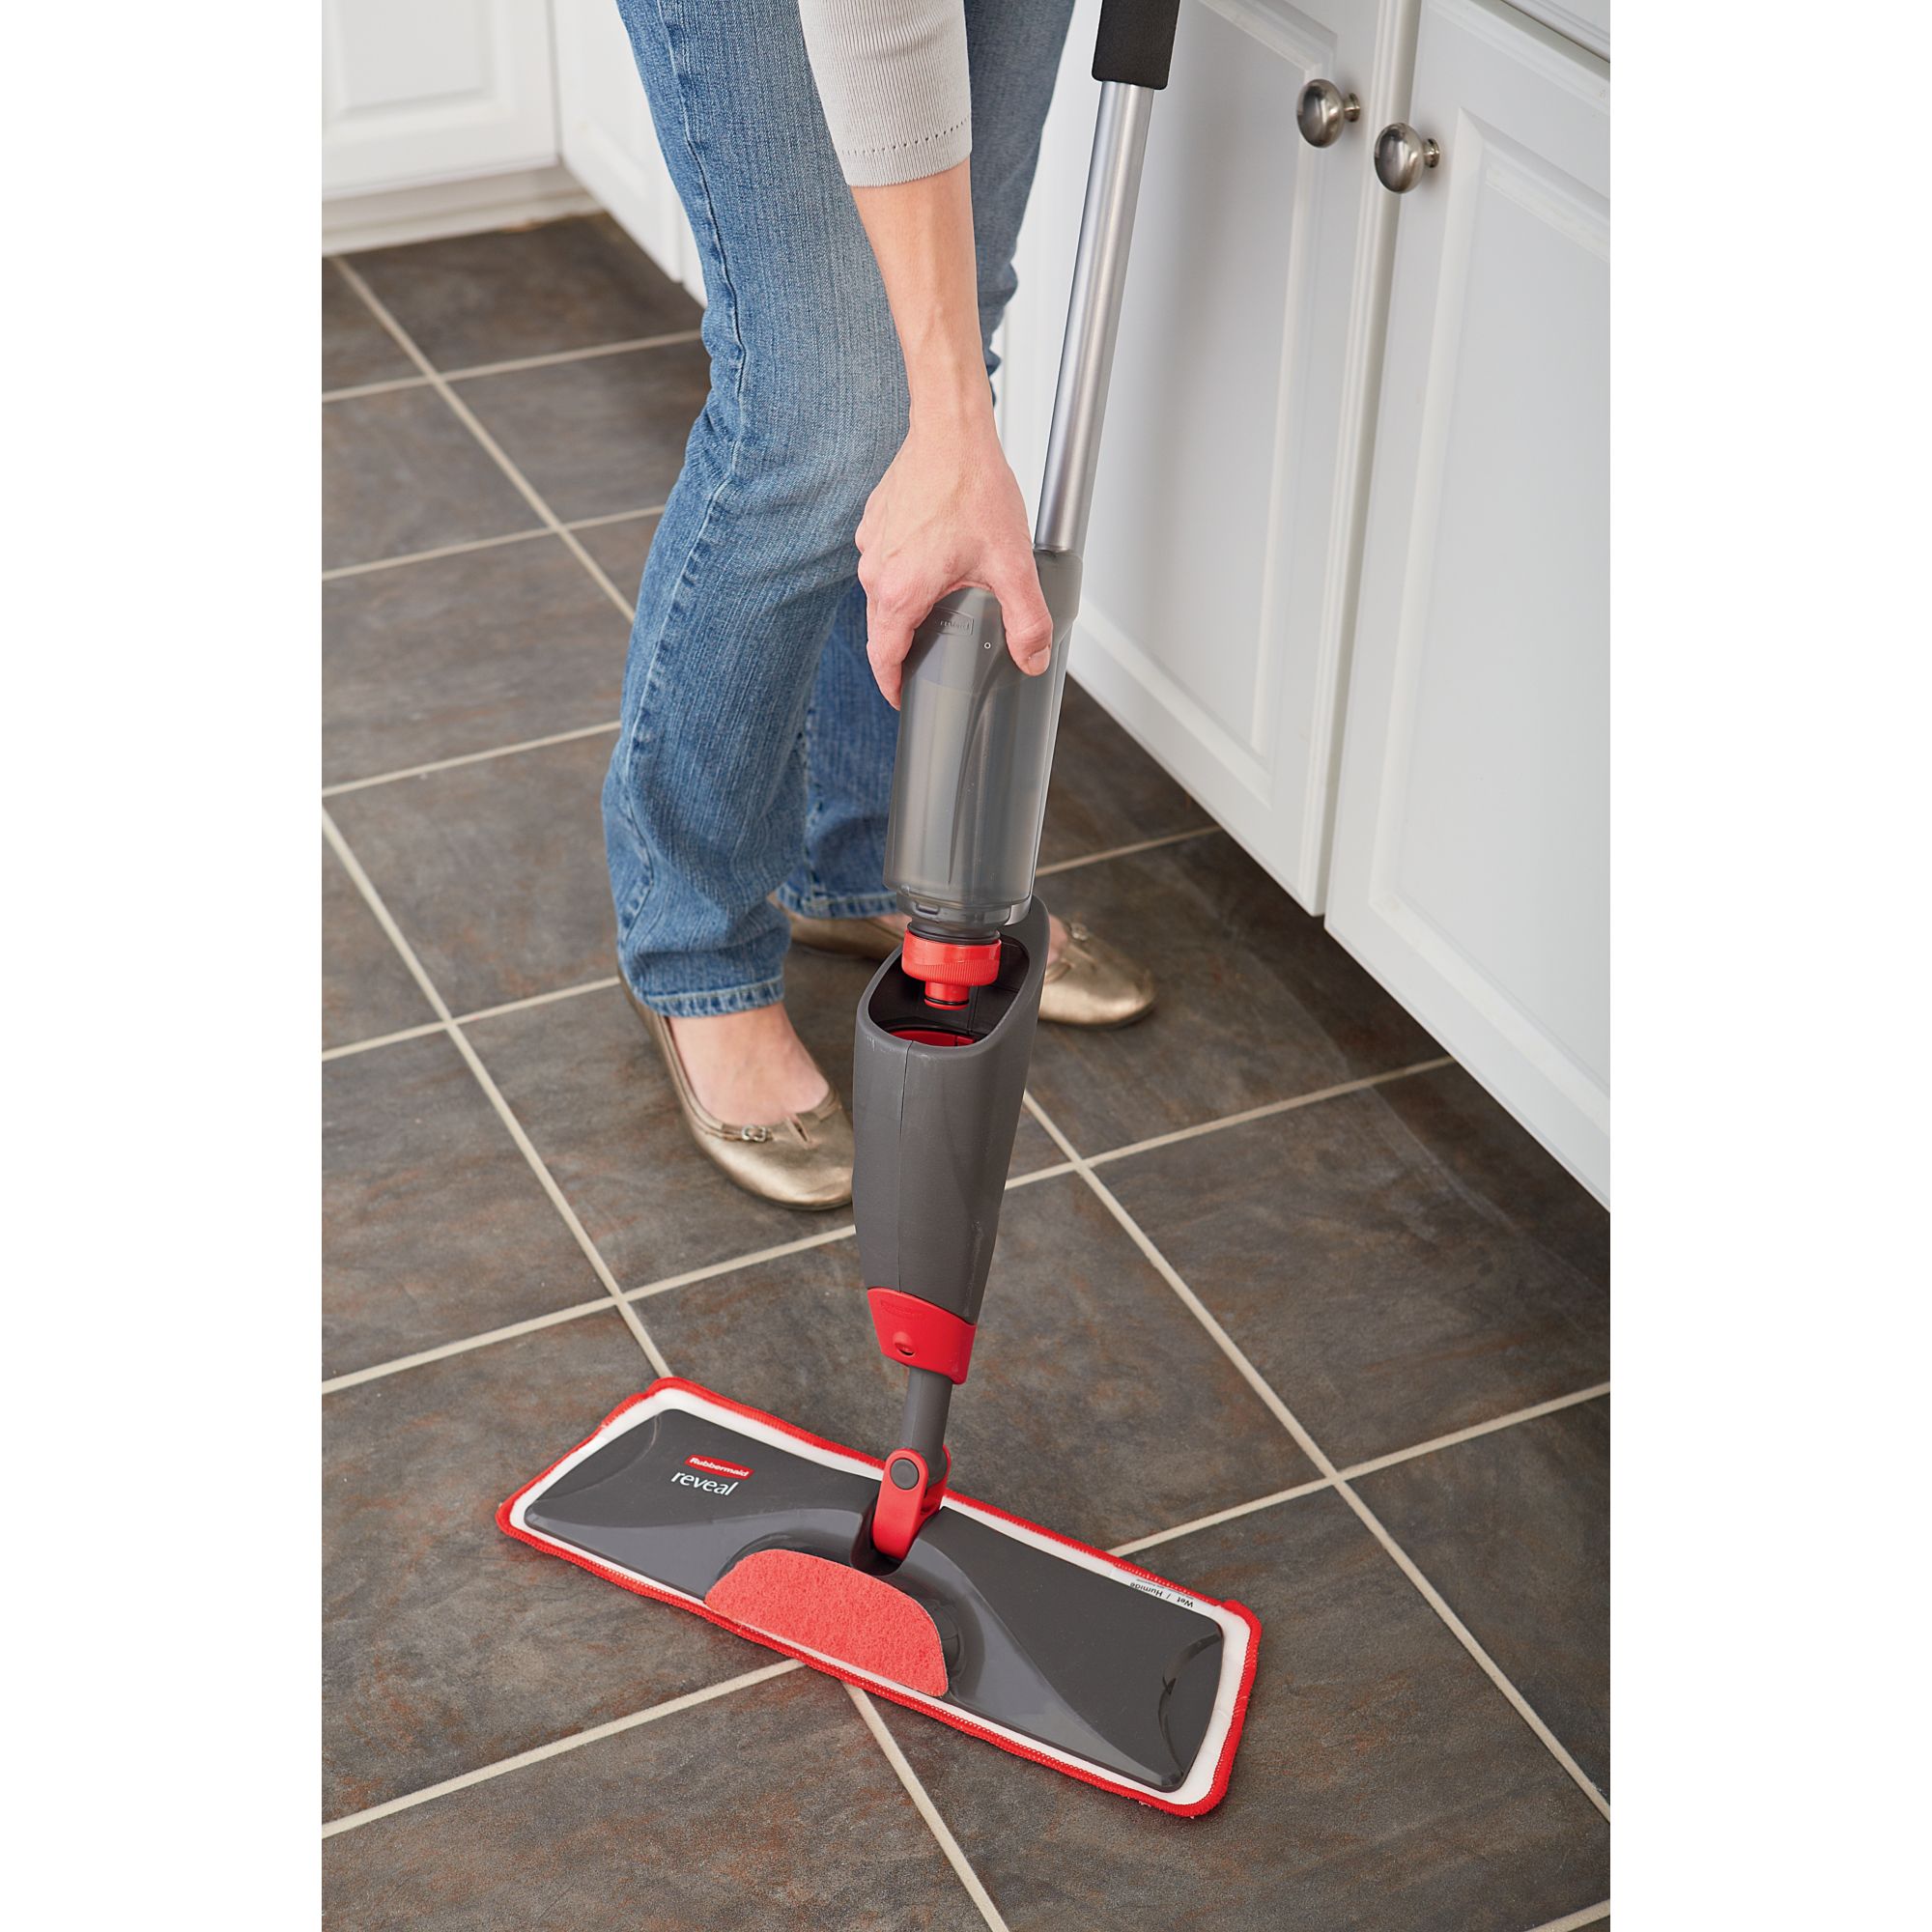 Rubbermaid Reveal Spray Microfiber Floor Cleaning Kit for Laminate